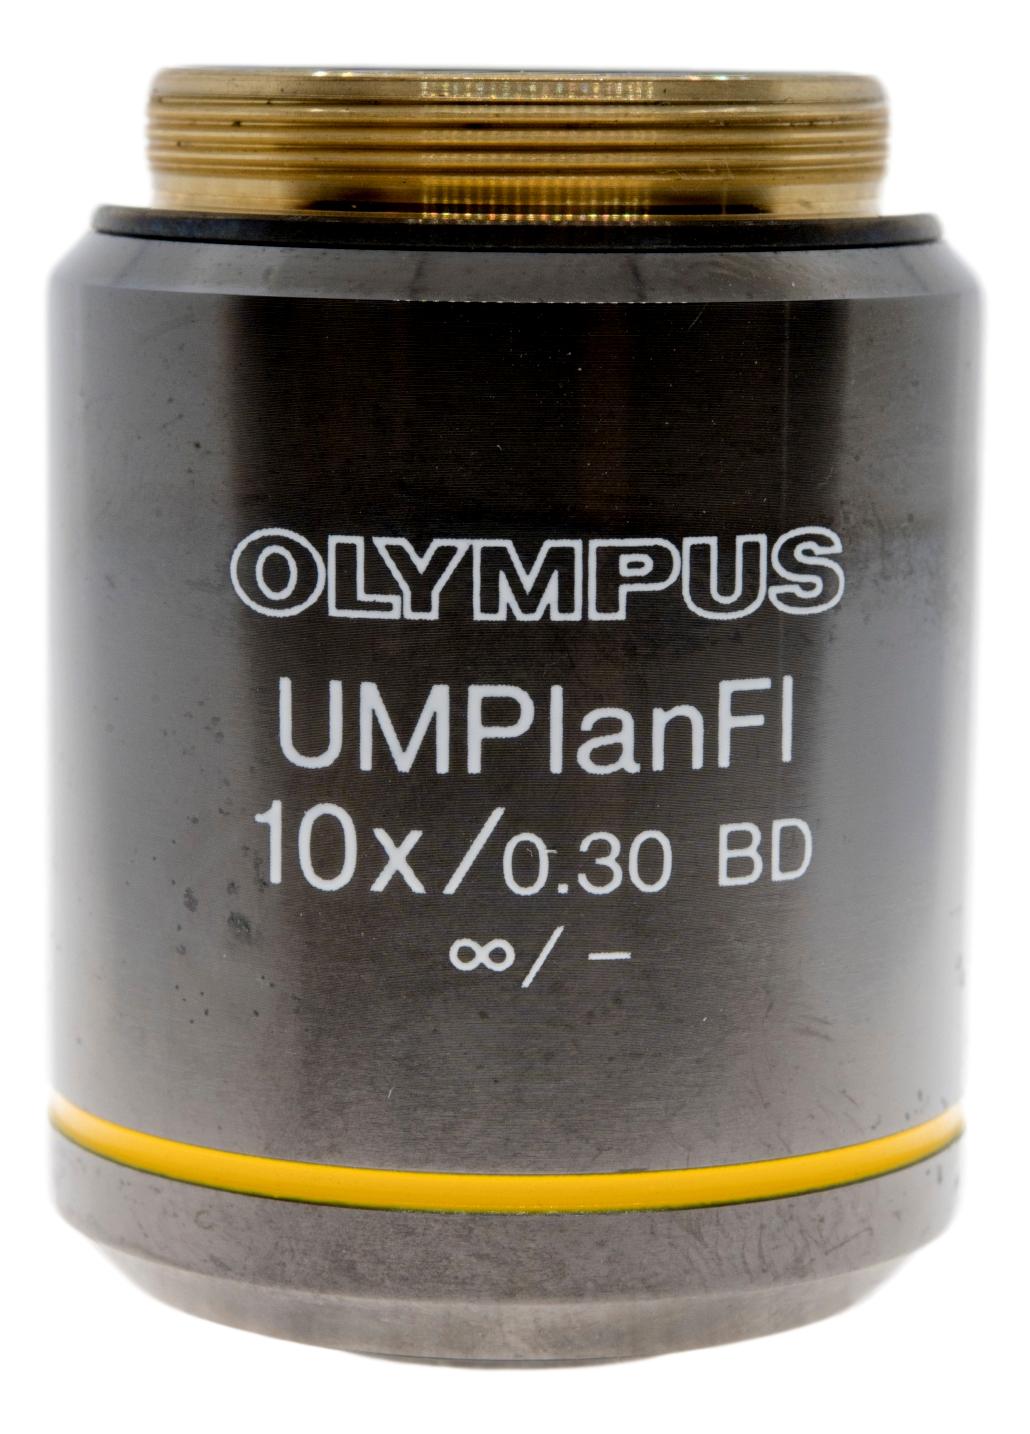 Olympus 10x UMPlanFl BD Infinity Corrected Objective